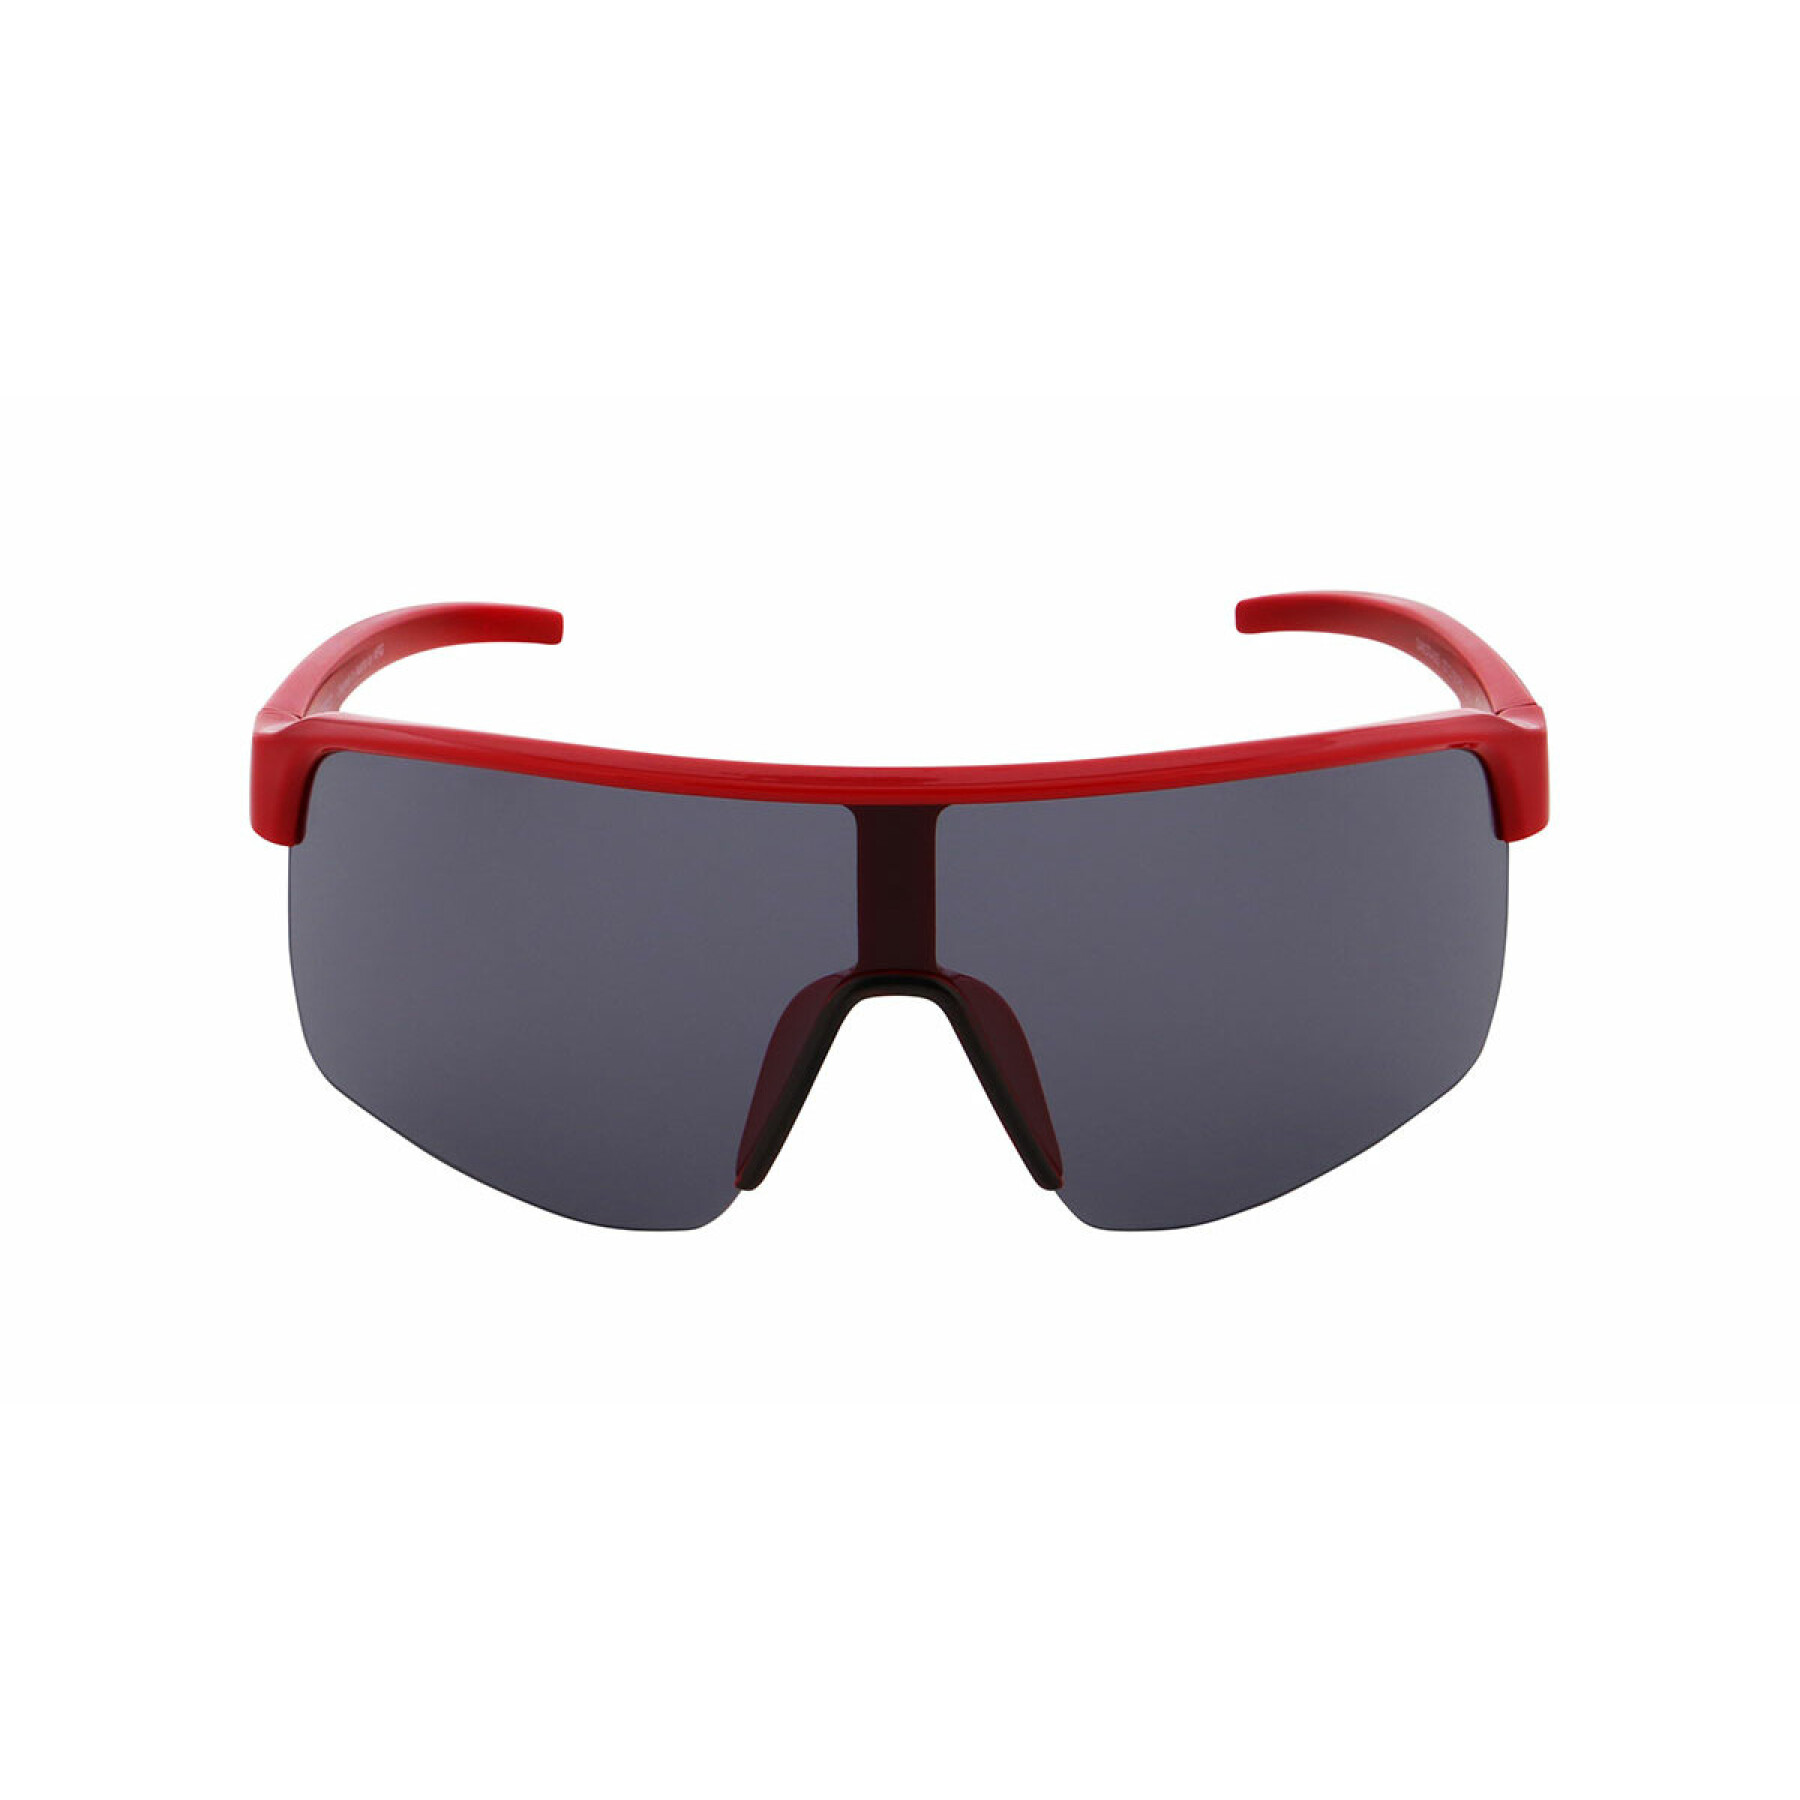 Sunglasses Redbull Spect Eyewear Dakota-005